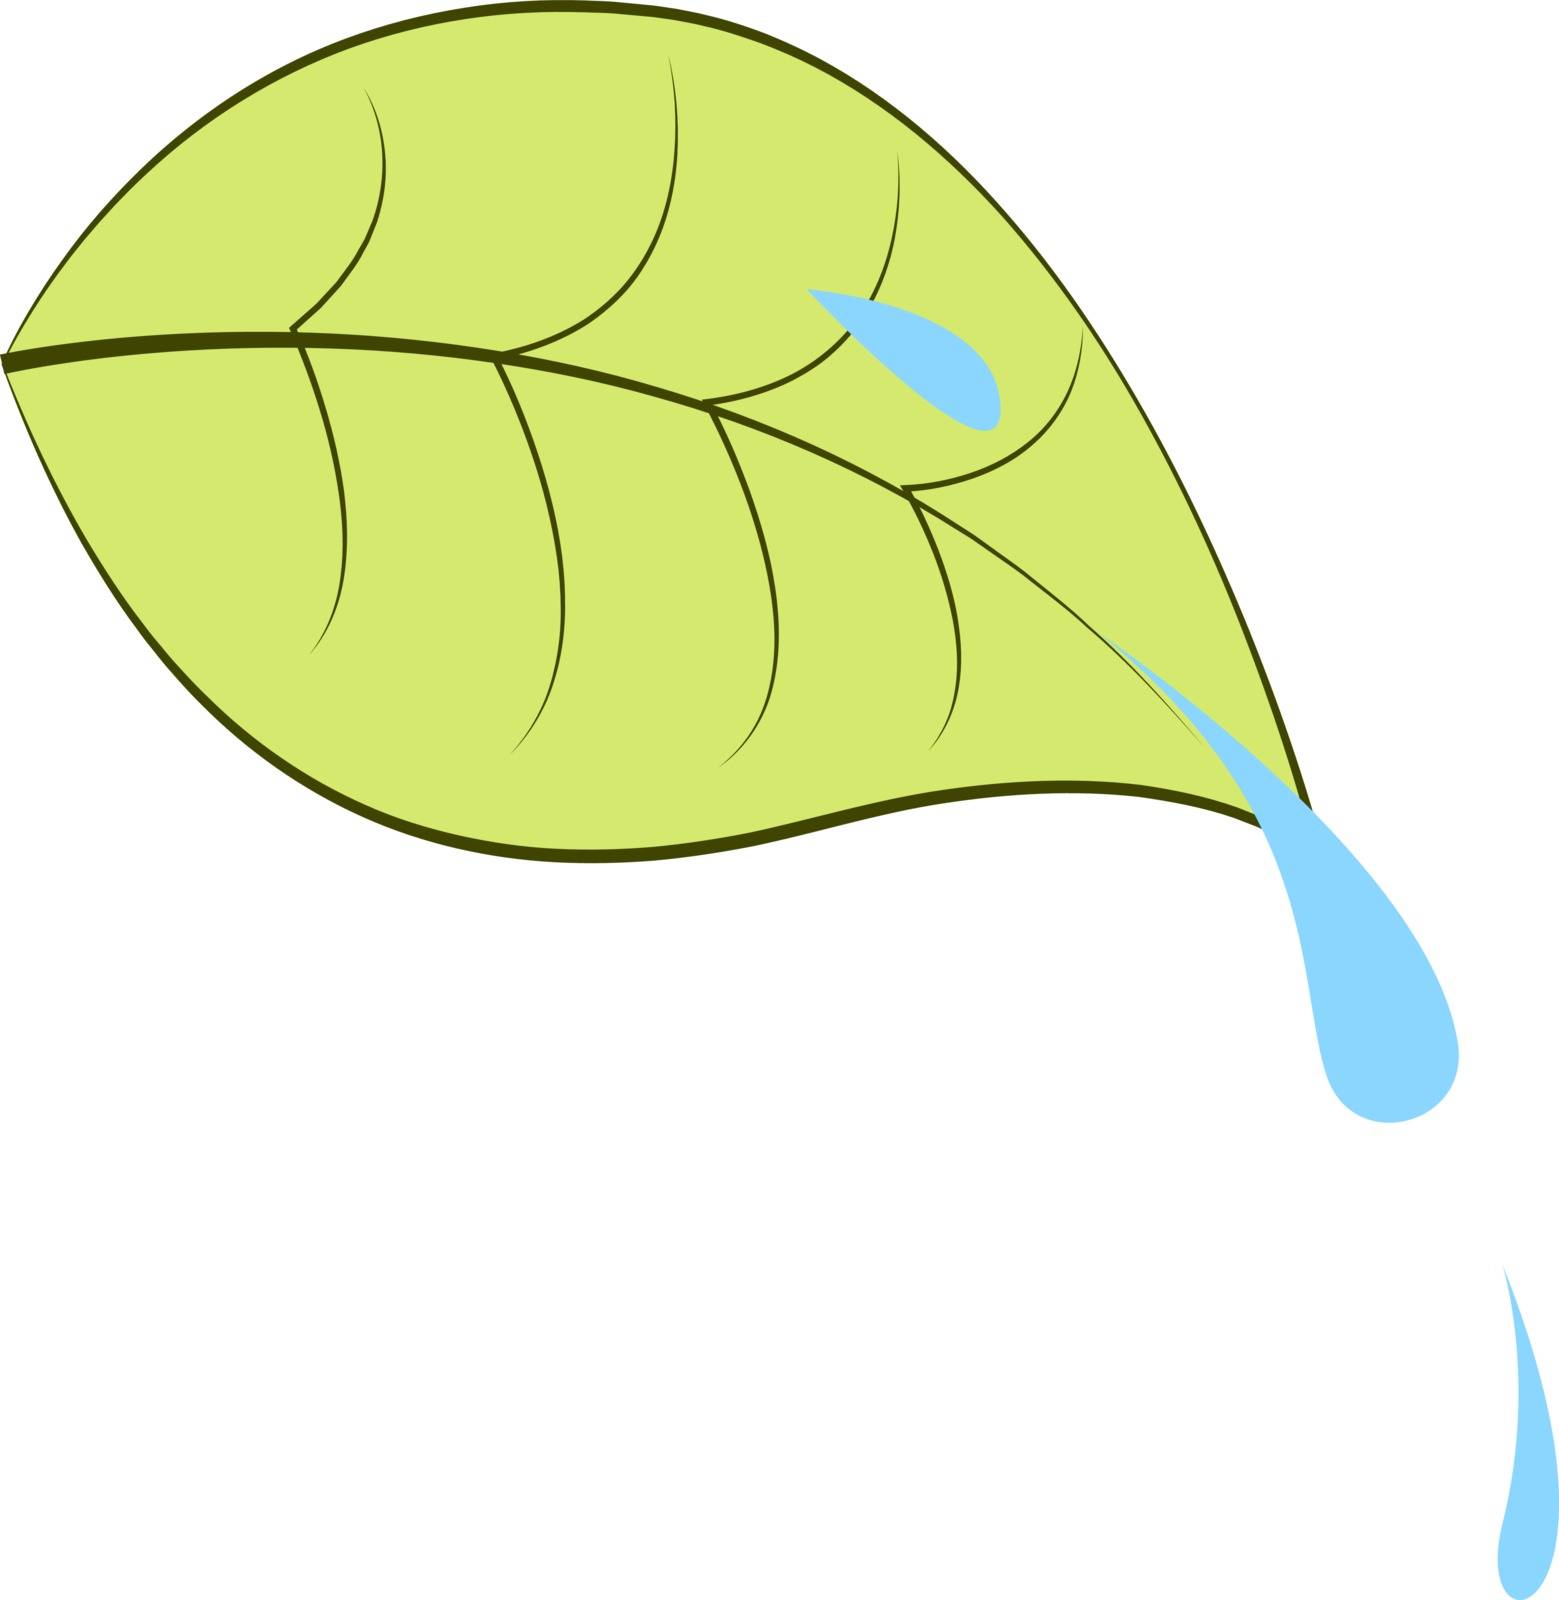 Morning dew, illustration, vector on white background.